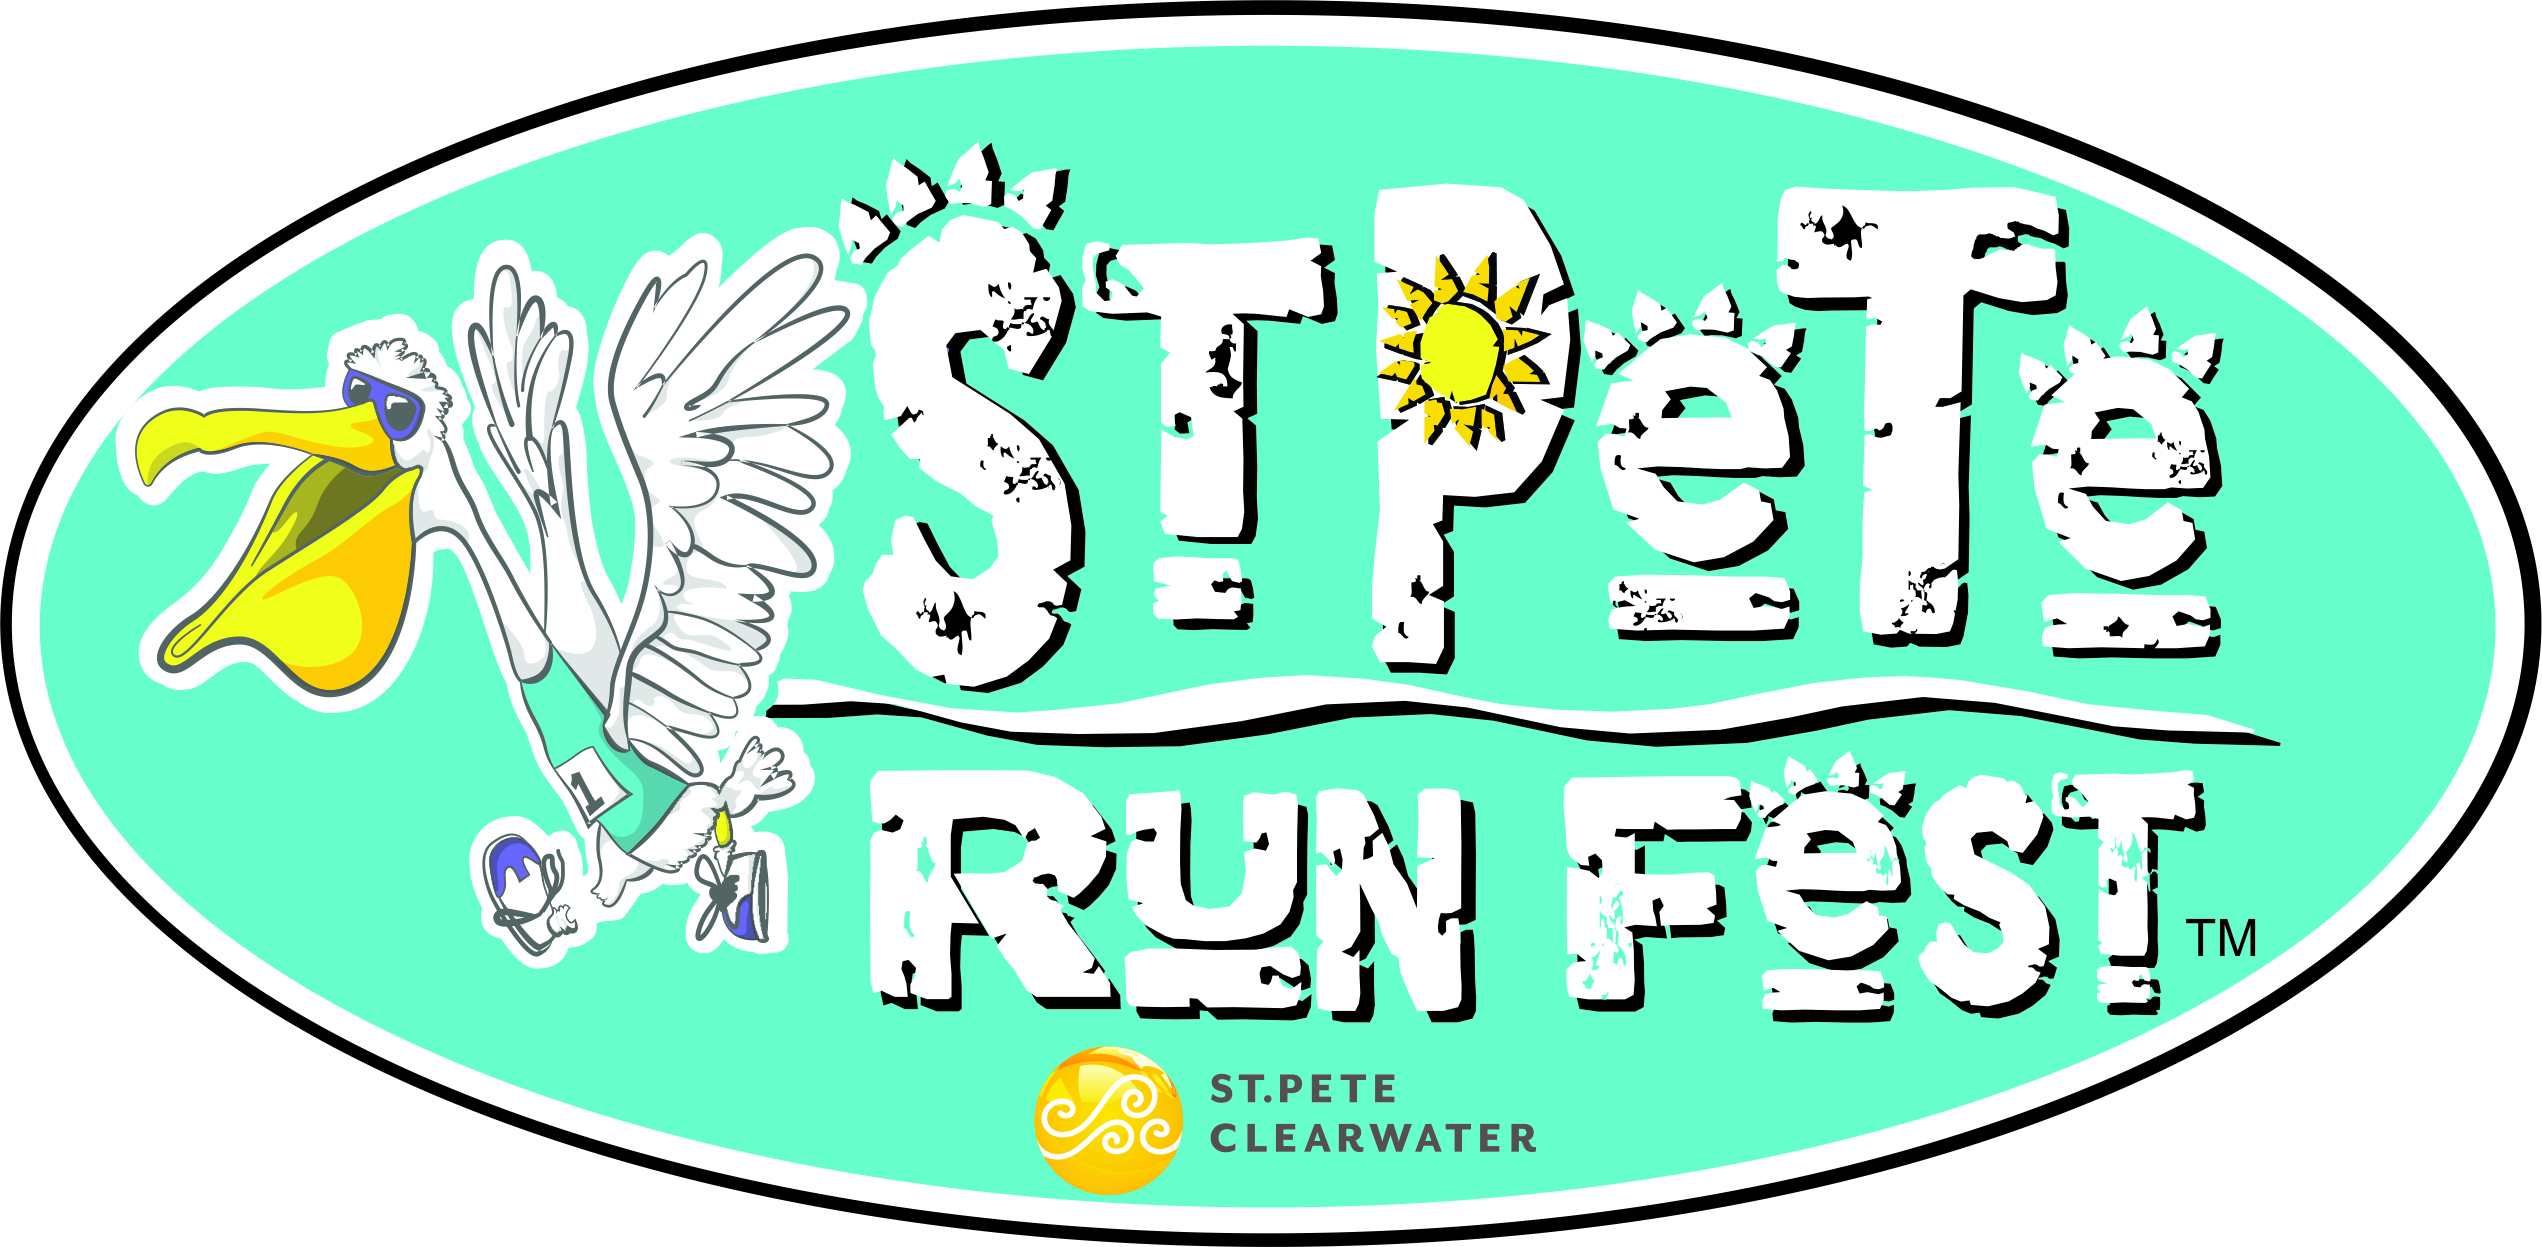 St Pete Run Fest